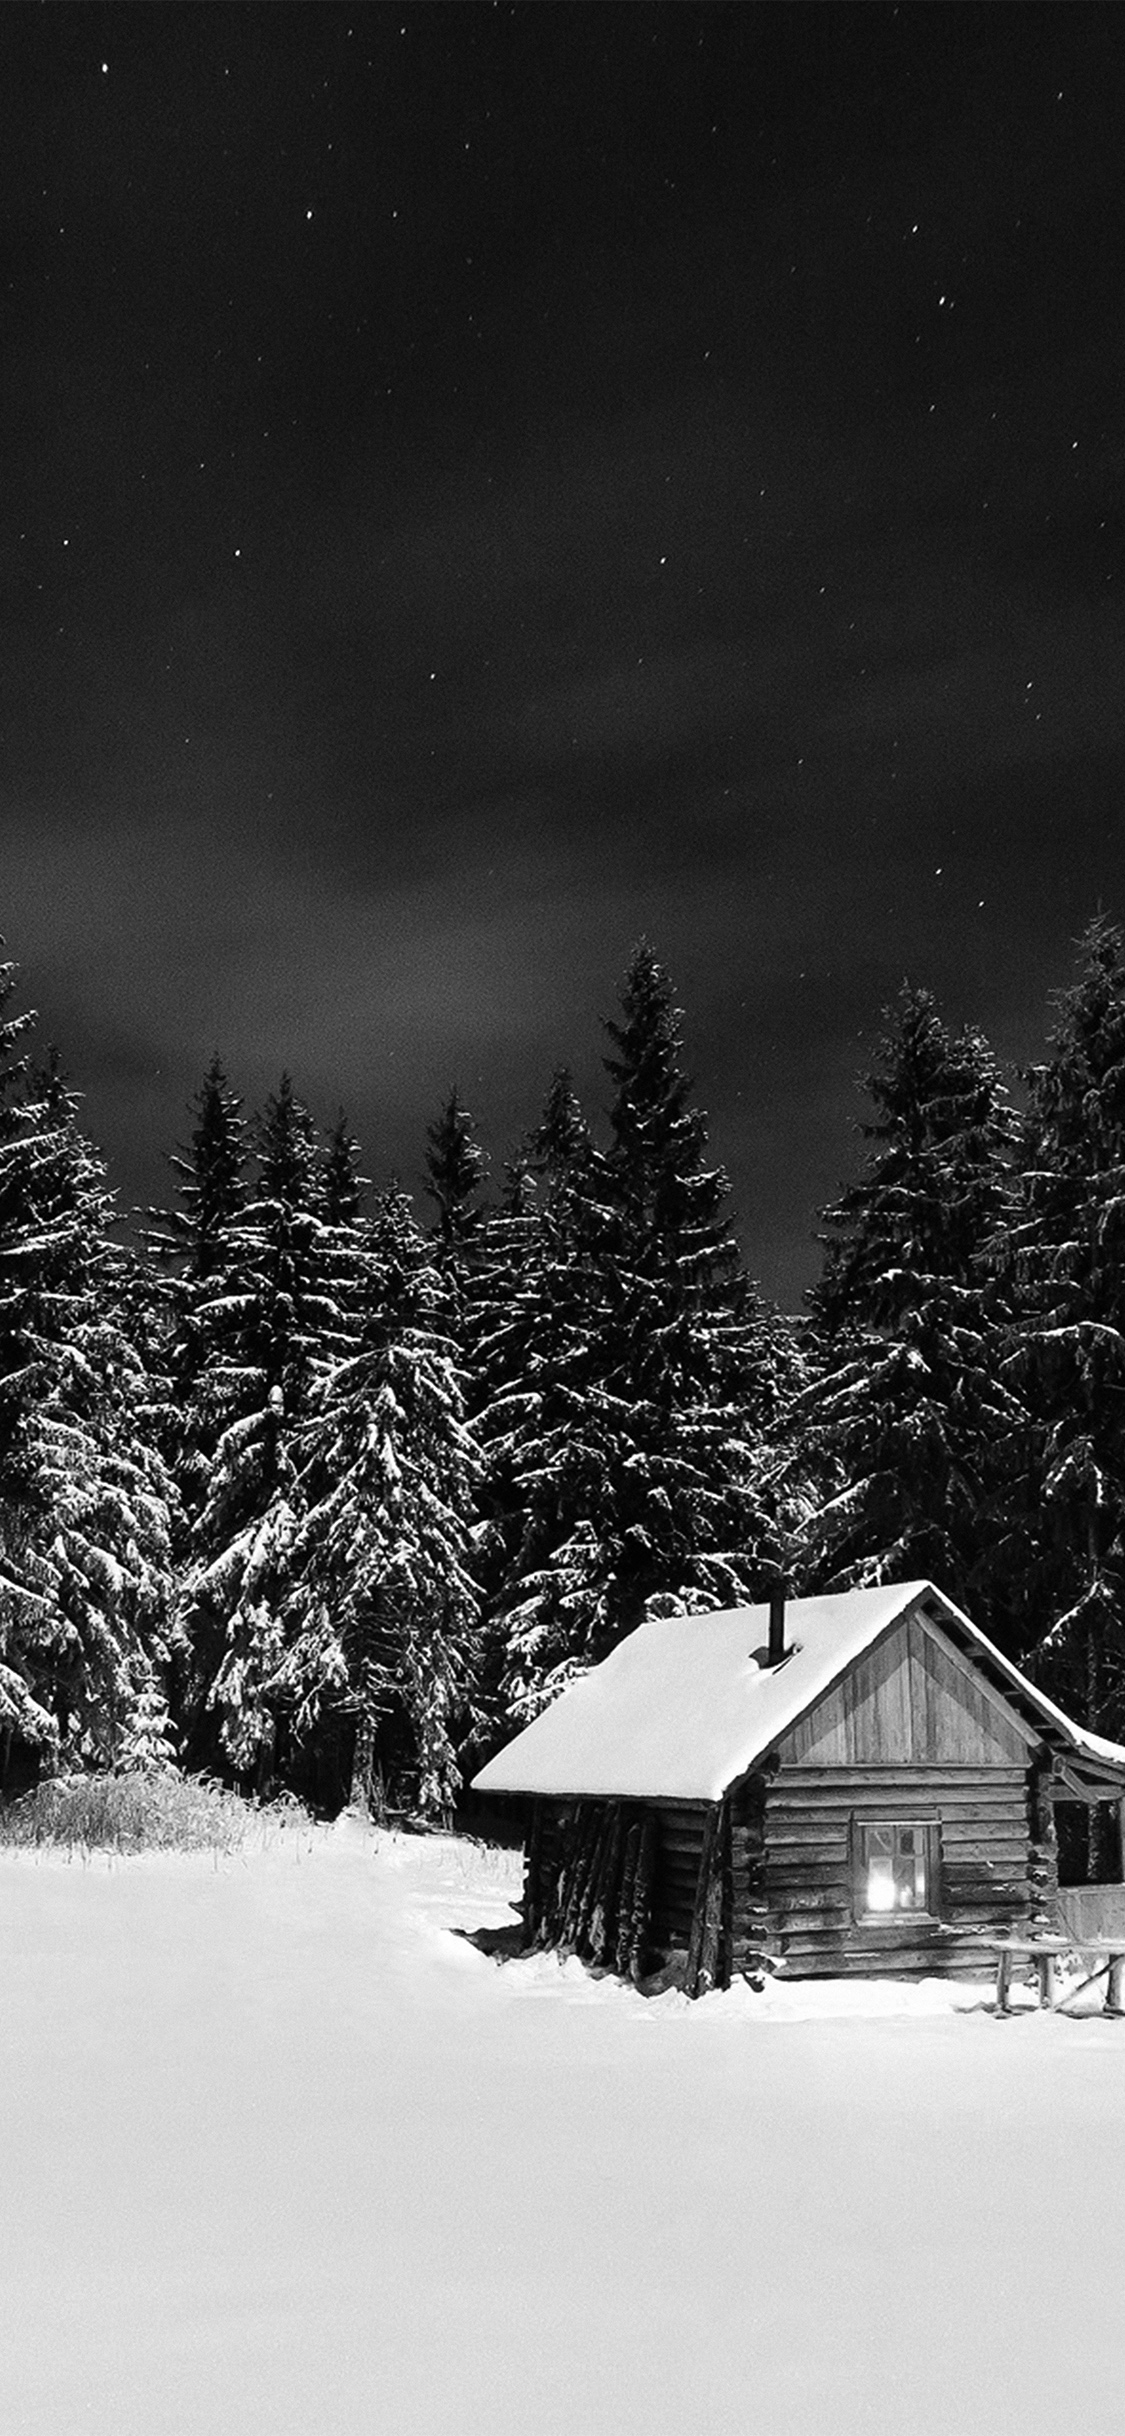 iPhone X wallpaper. winter house night sky christmas starry bw dark